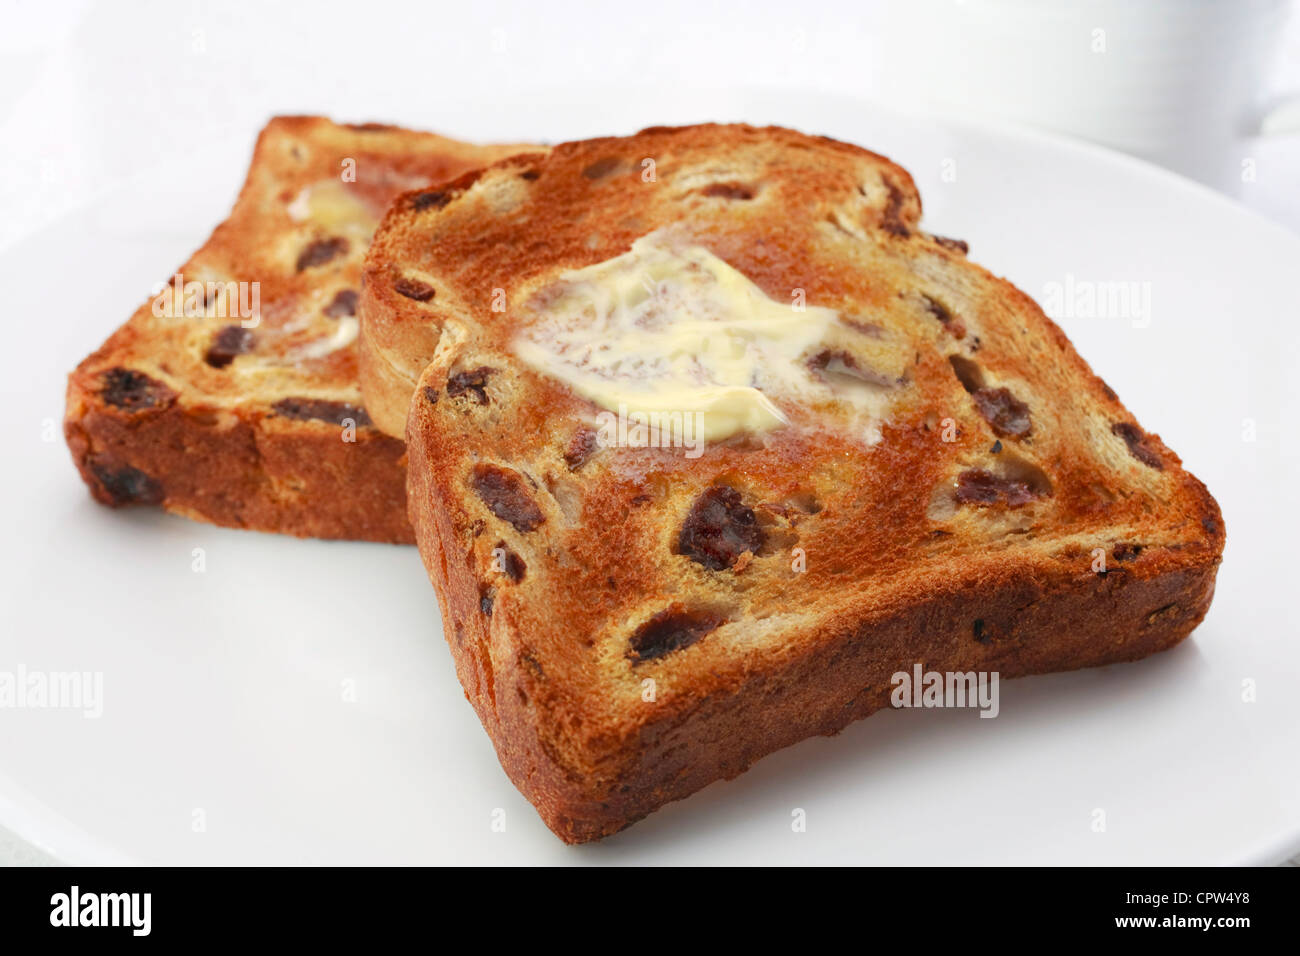 Heart healthy, polyunsaturated sunflower oil margarine, melting into raisin toast. Stock Photo